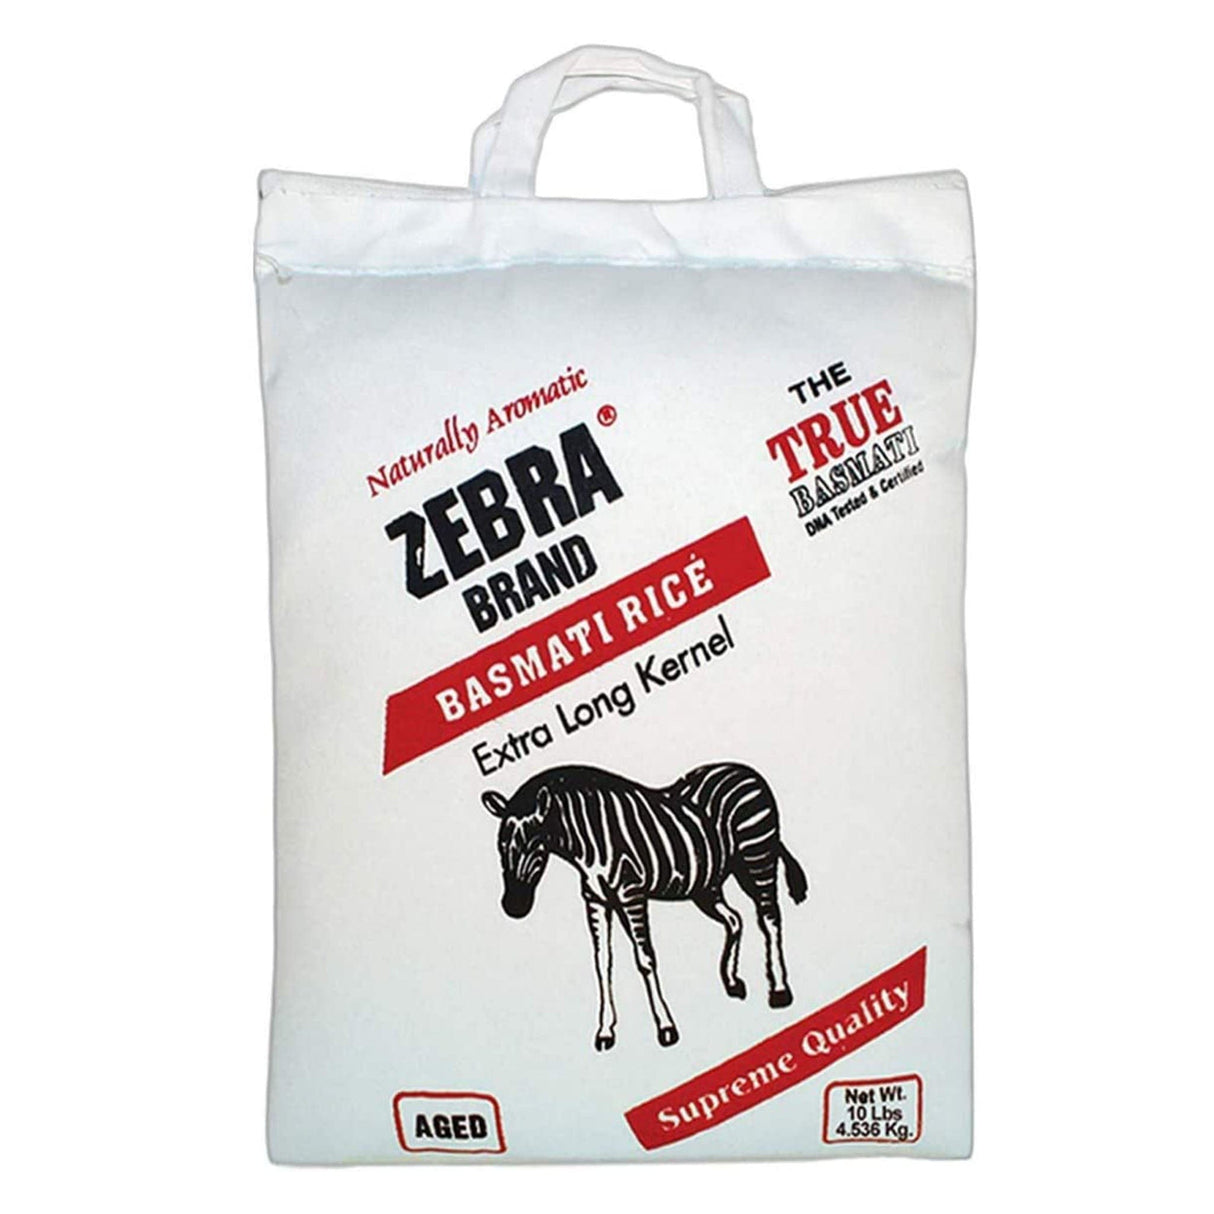 Zebra Brand Basmati Rice